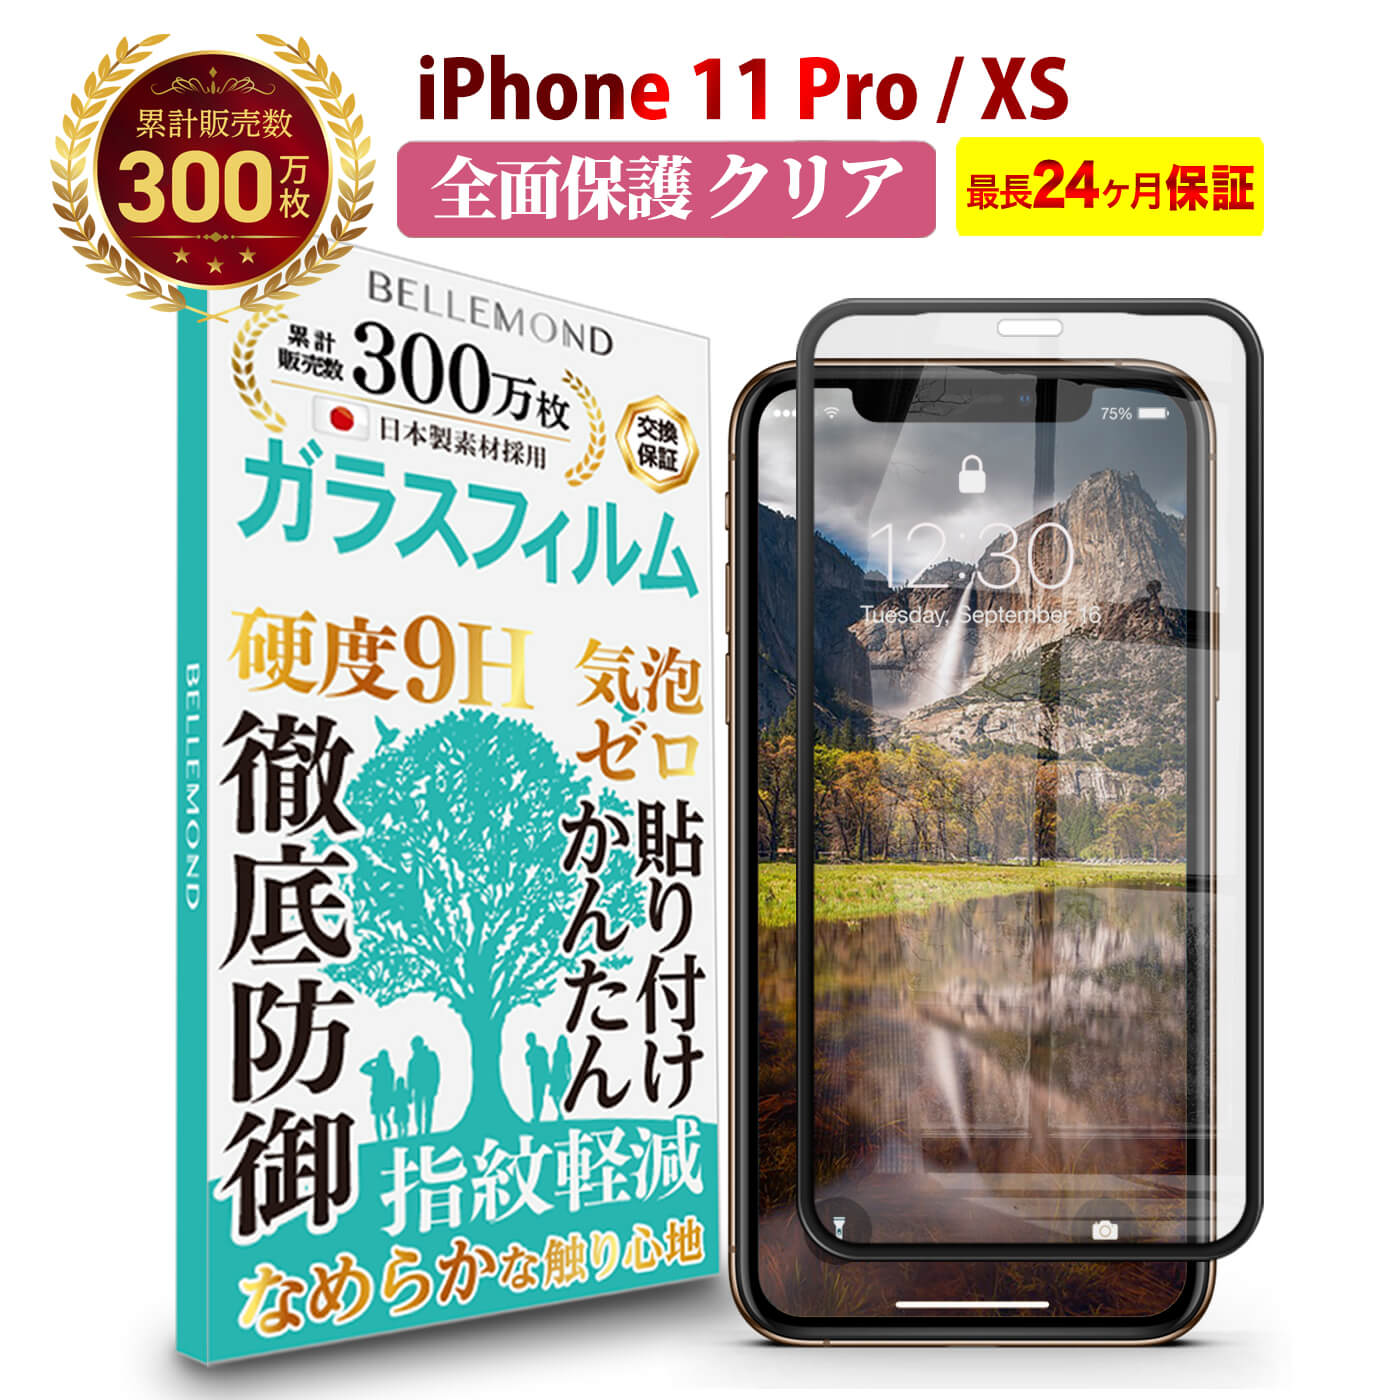  iPhone 11 ProiPhone XS 全面保護 ガラスフィルム クリア 透明アイフォン iPhone11pro iPhone10s 液晶 保護フィルム 高透過 高光沢 硬度 9H 強化ガラス